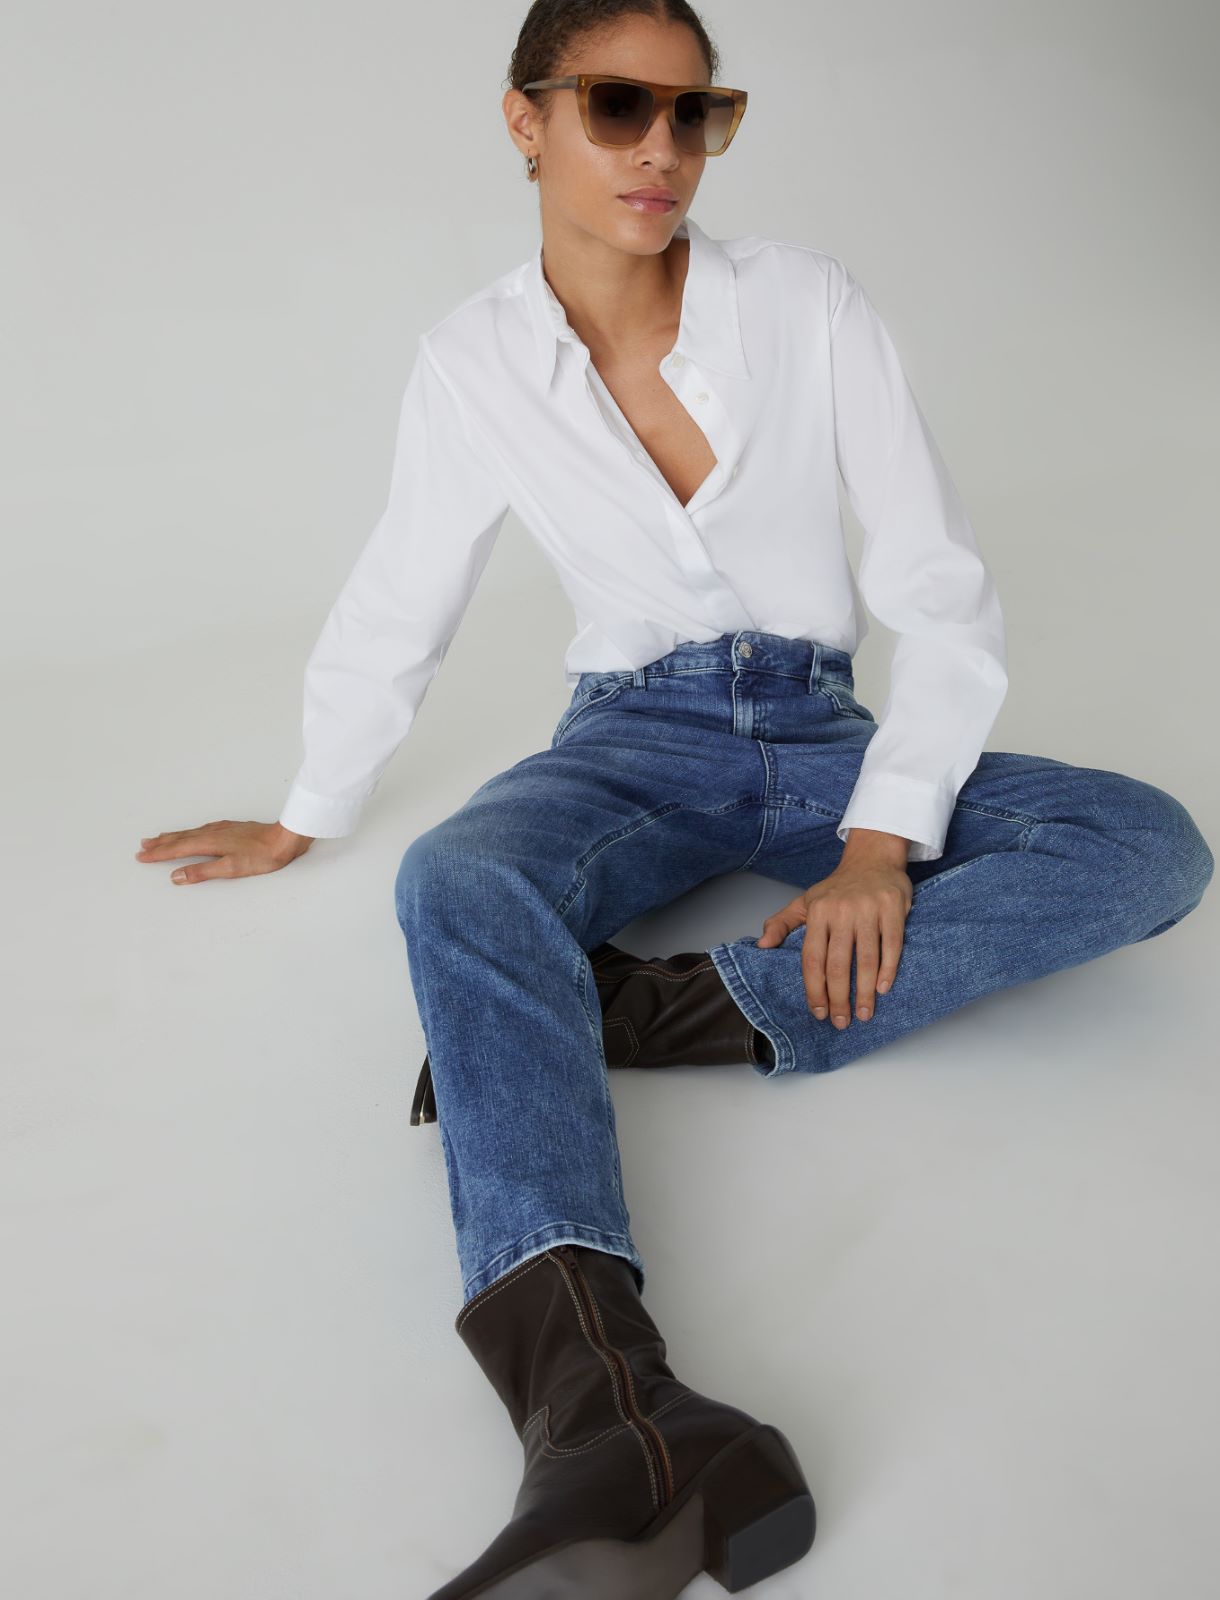 Jeans tomboy - Blue jeans - Marella - 3